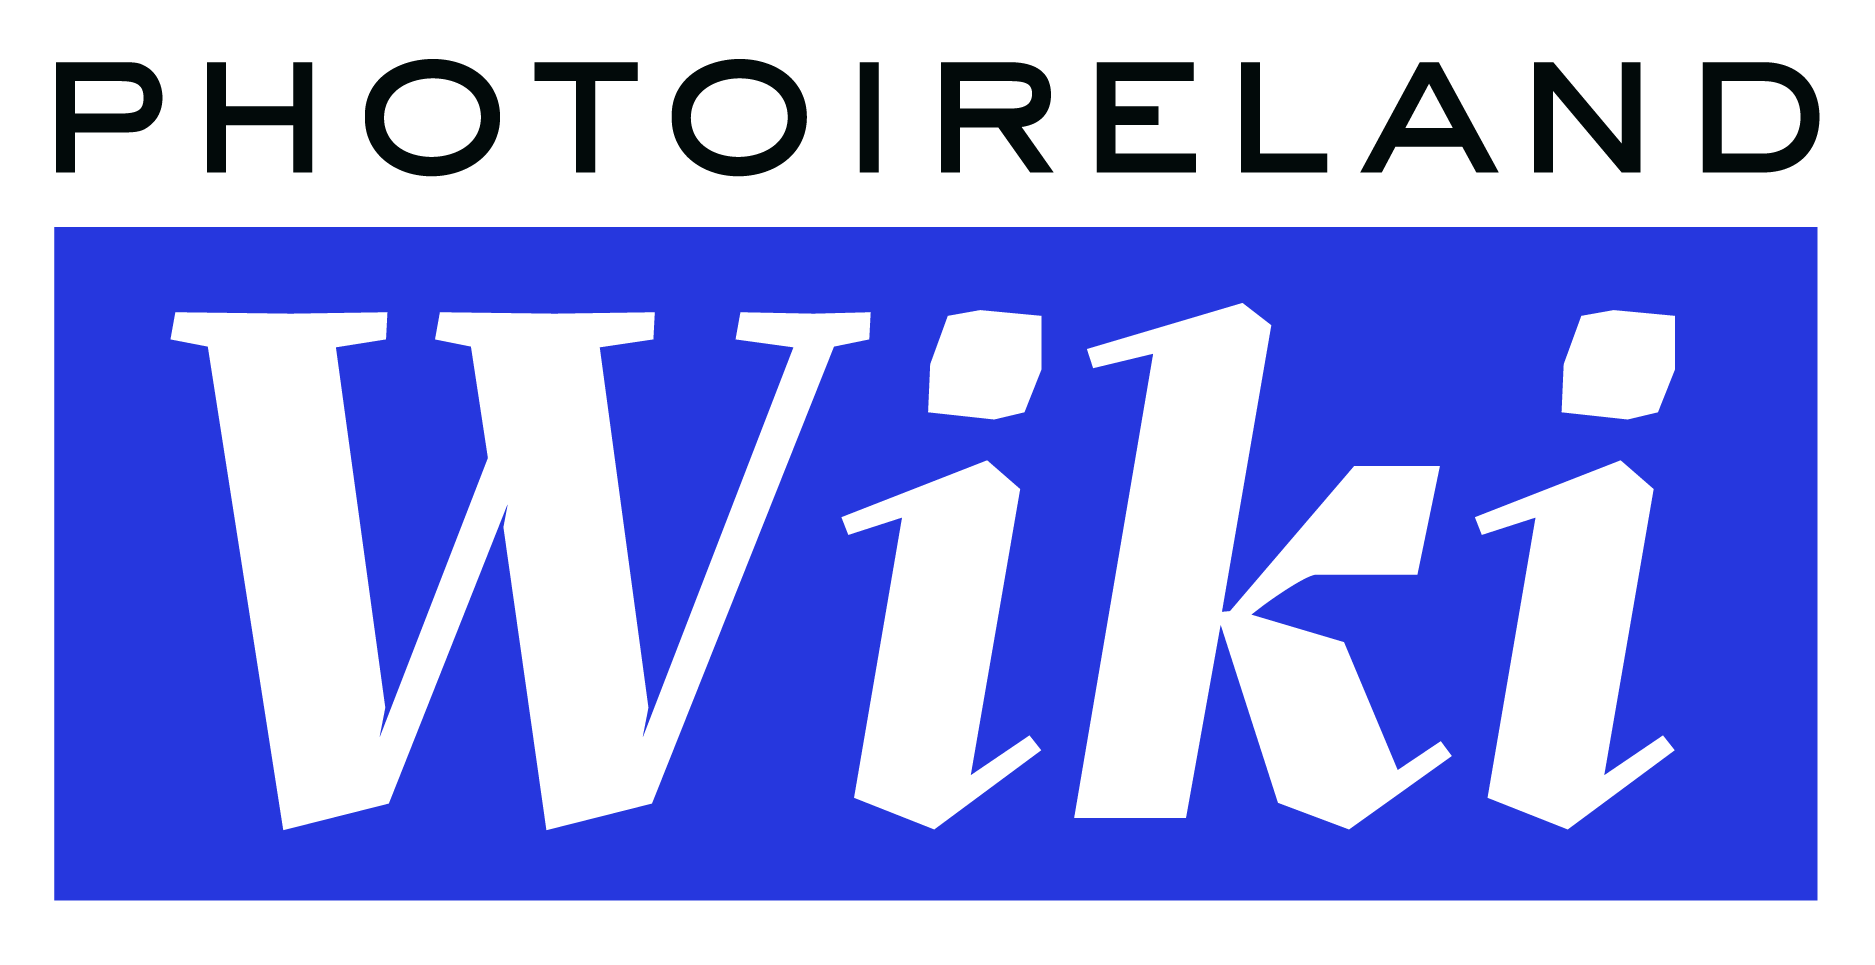 PhotoIreland Wiki